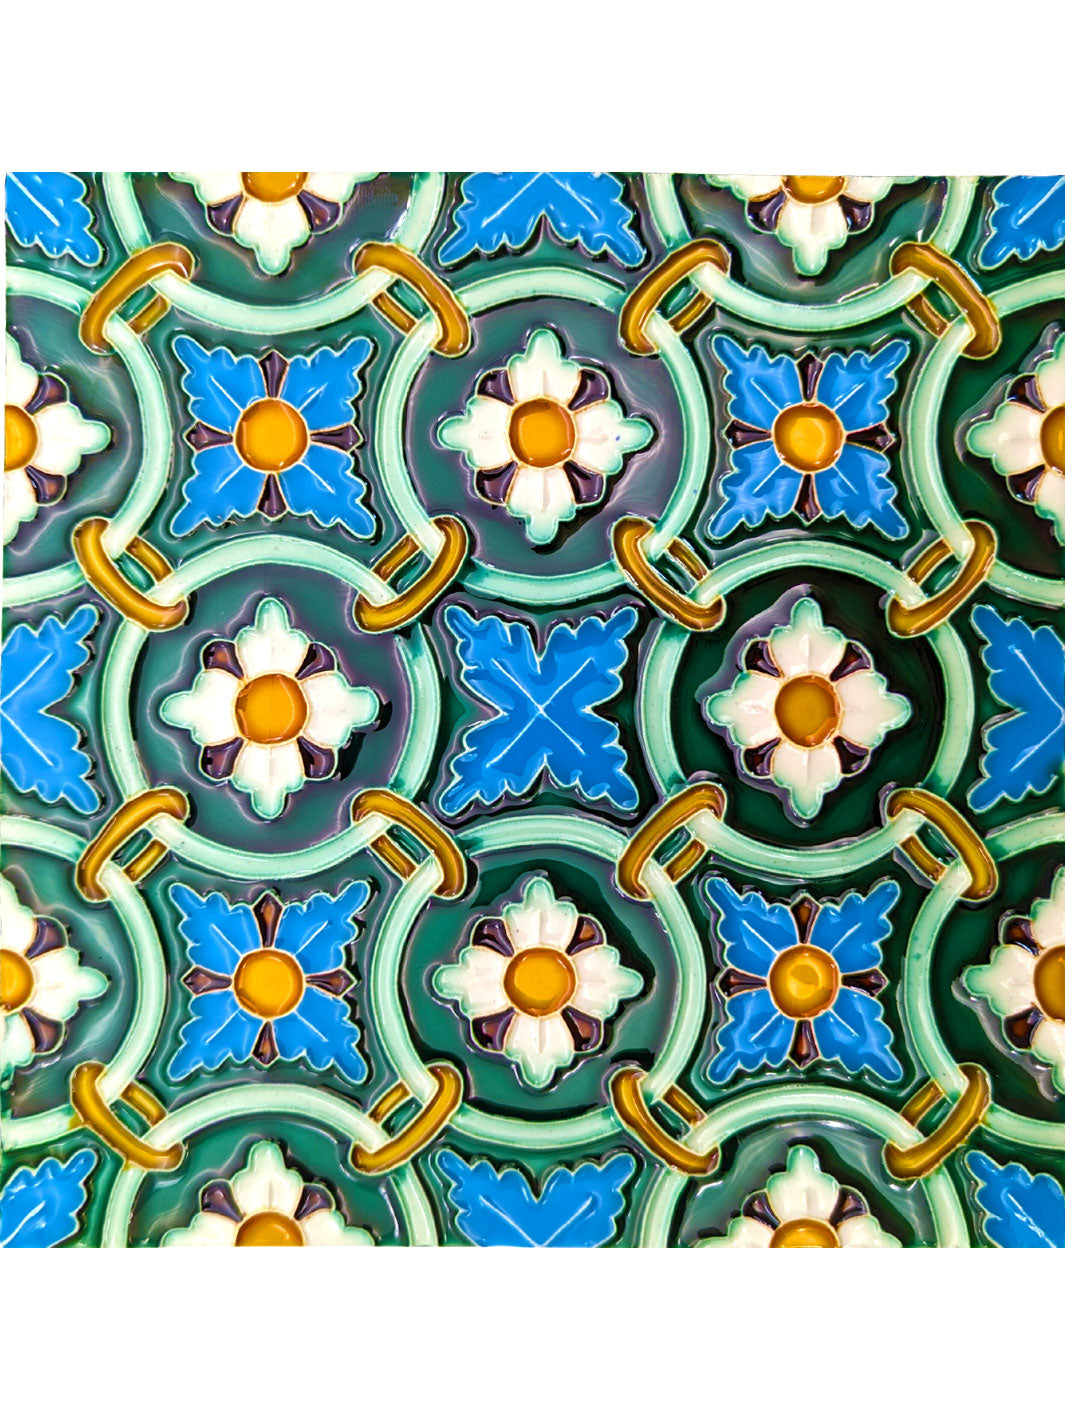 Hand painted Portuguese Ceramic Tile Square Trivet